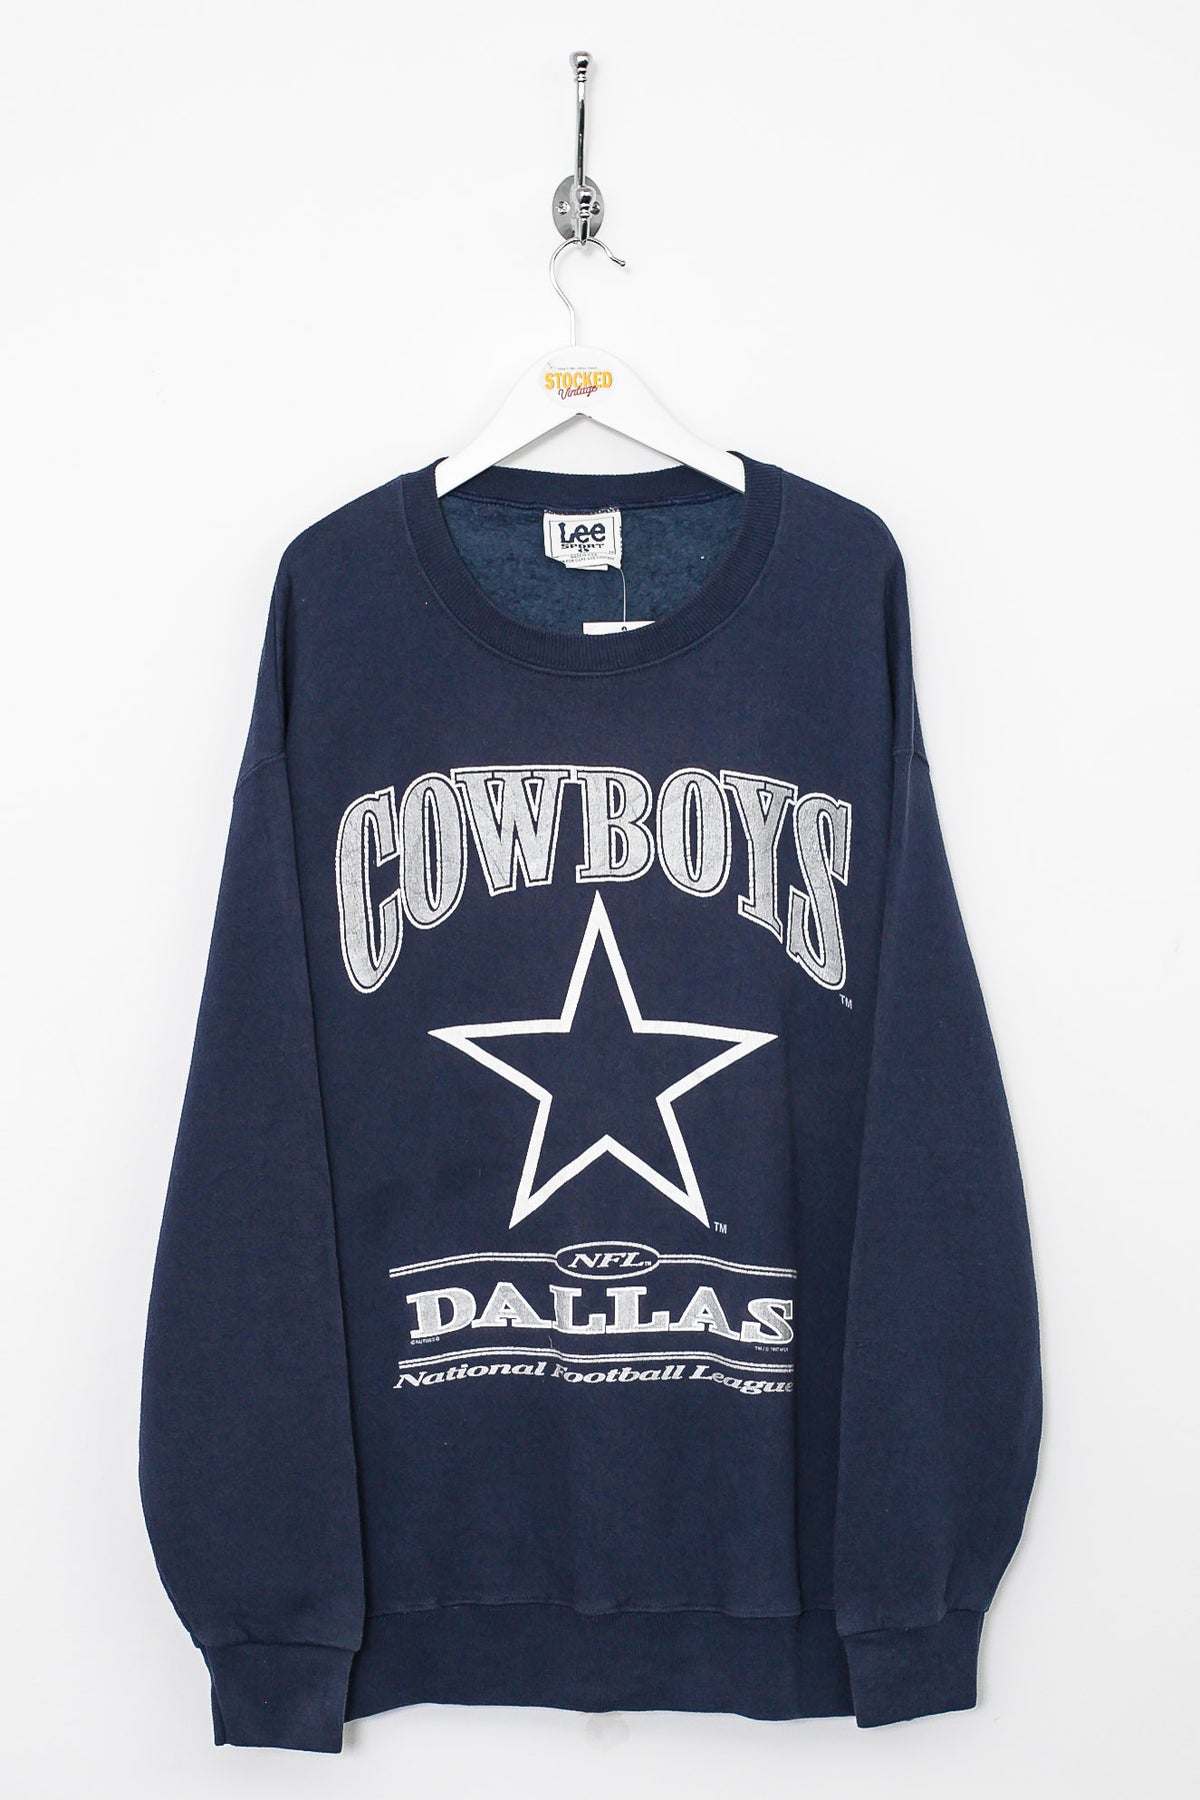 1997 NFL Dallas Cowboys Sweatshirt (L)